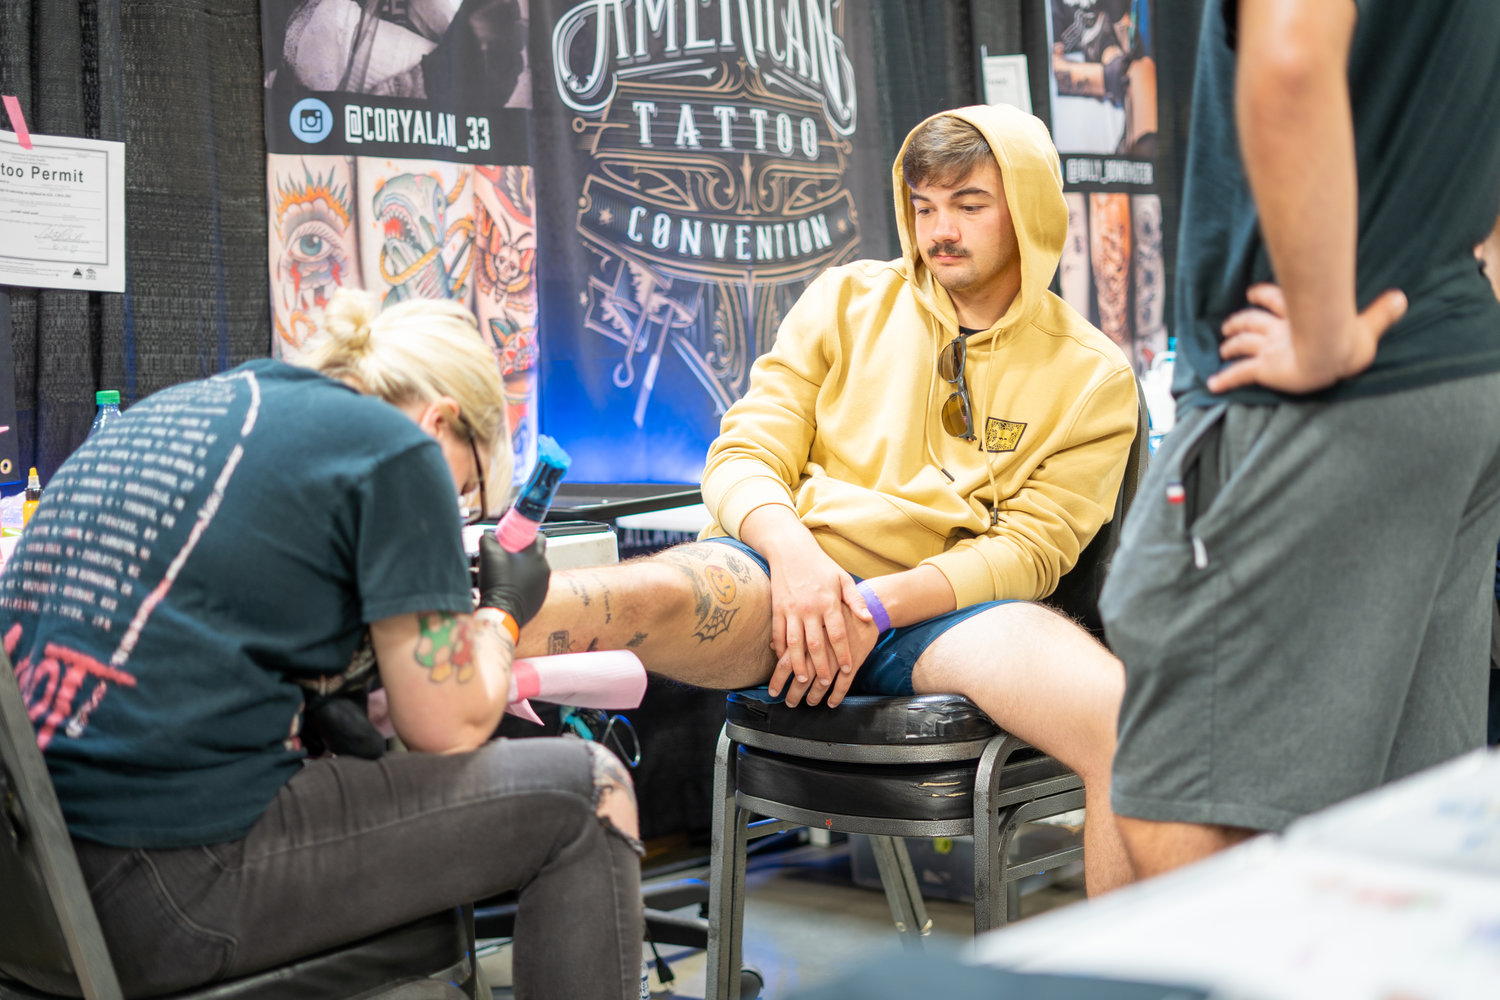 Dakota Watkins getting a tattoo at this year's Comic Con.